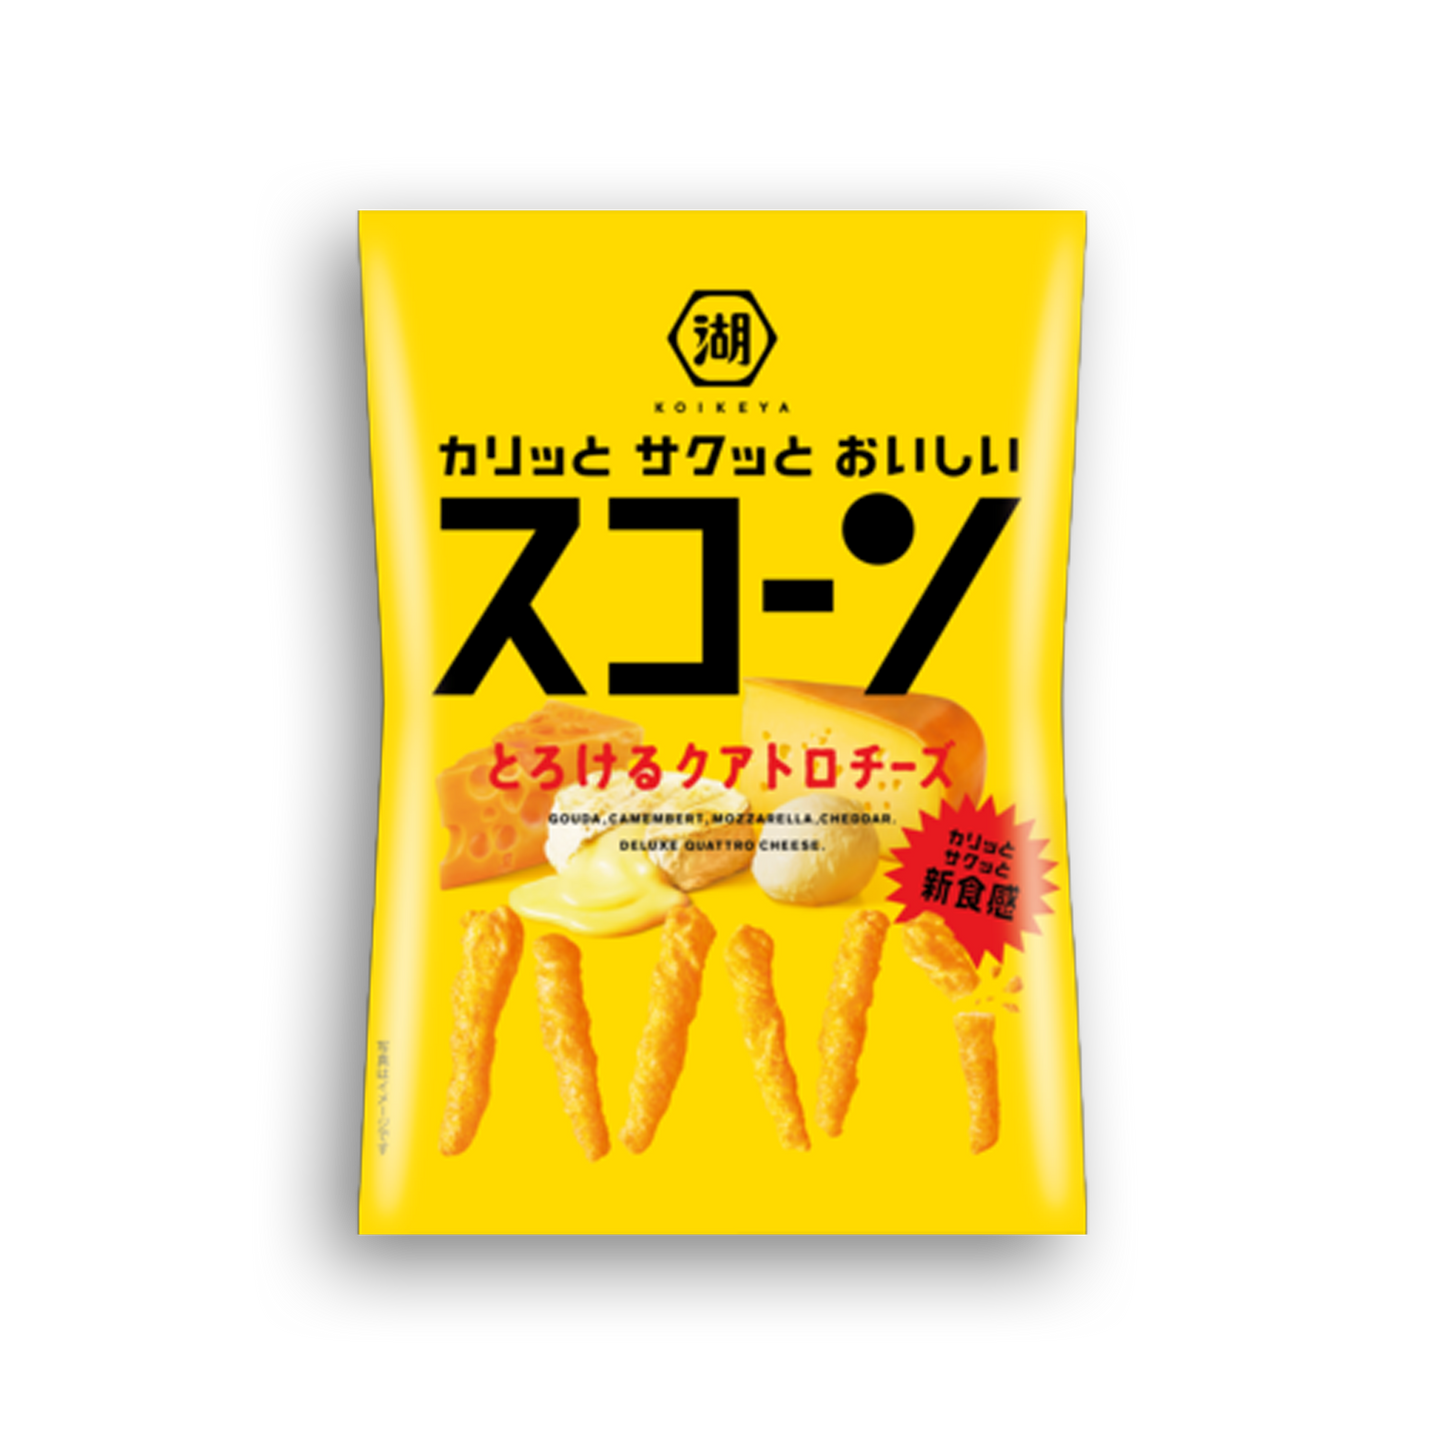 KOIKEYA Corn Sticks Cheese Flavor 75g